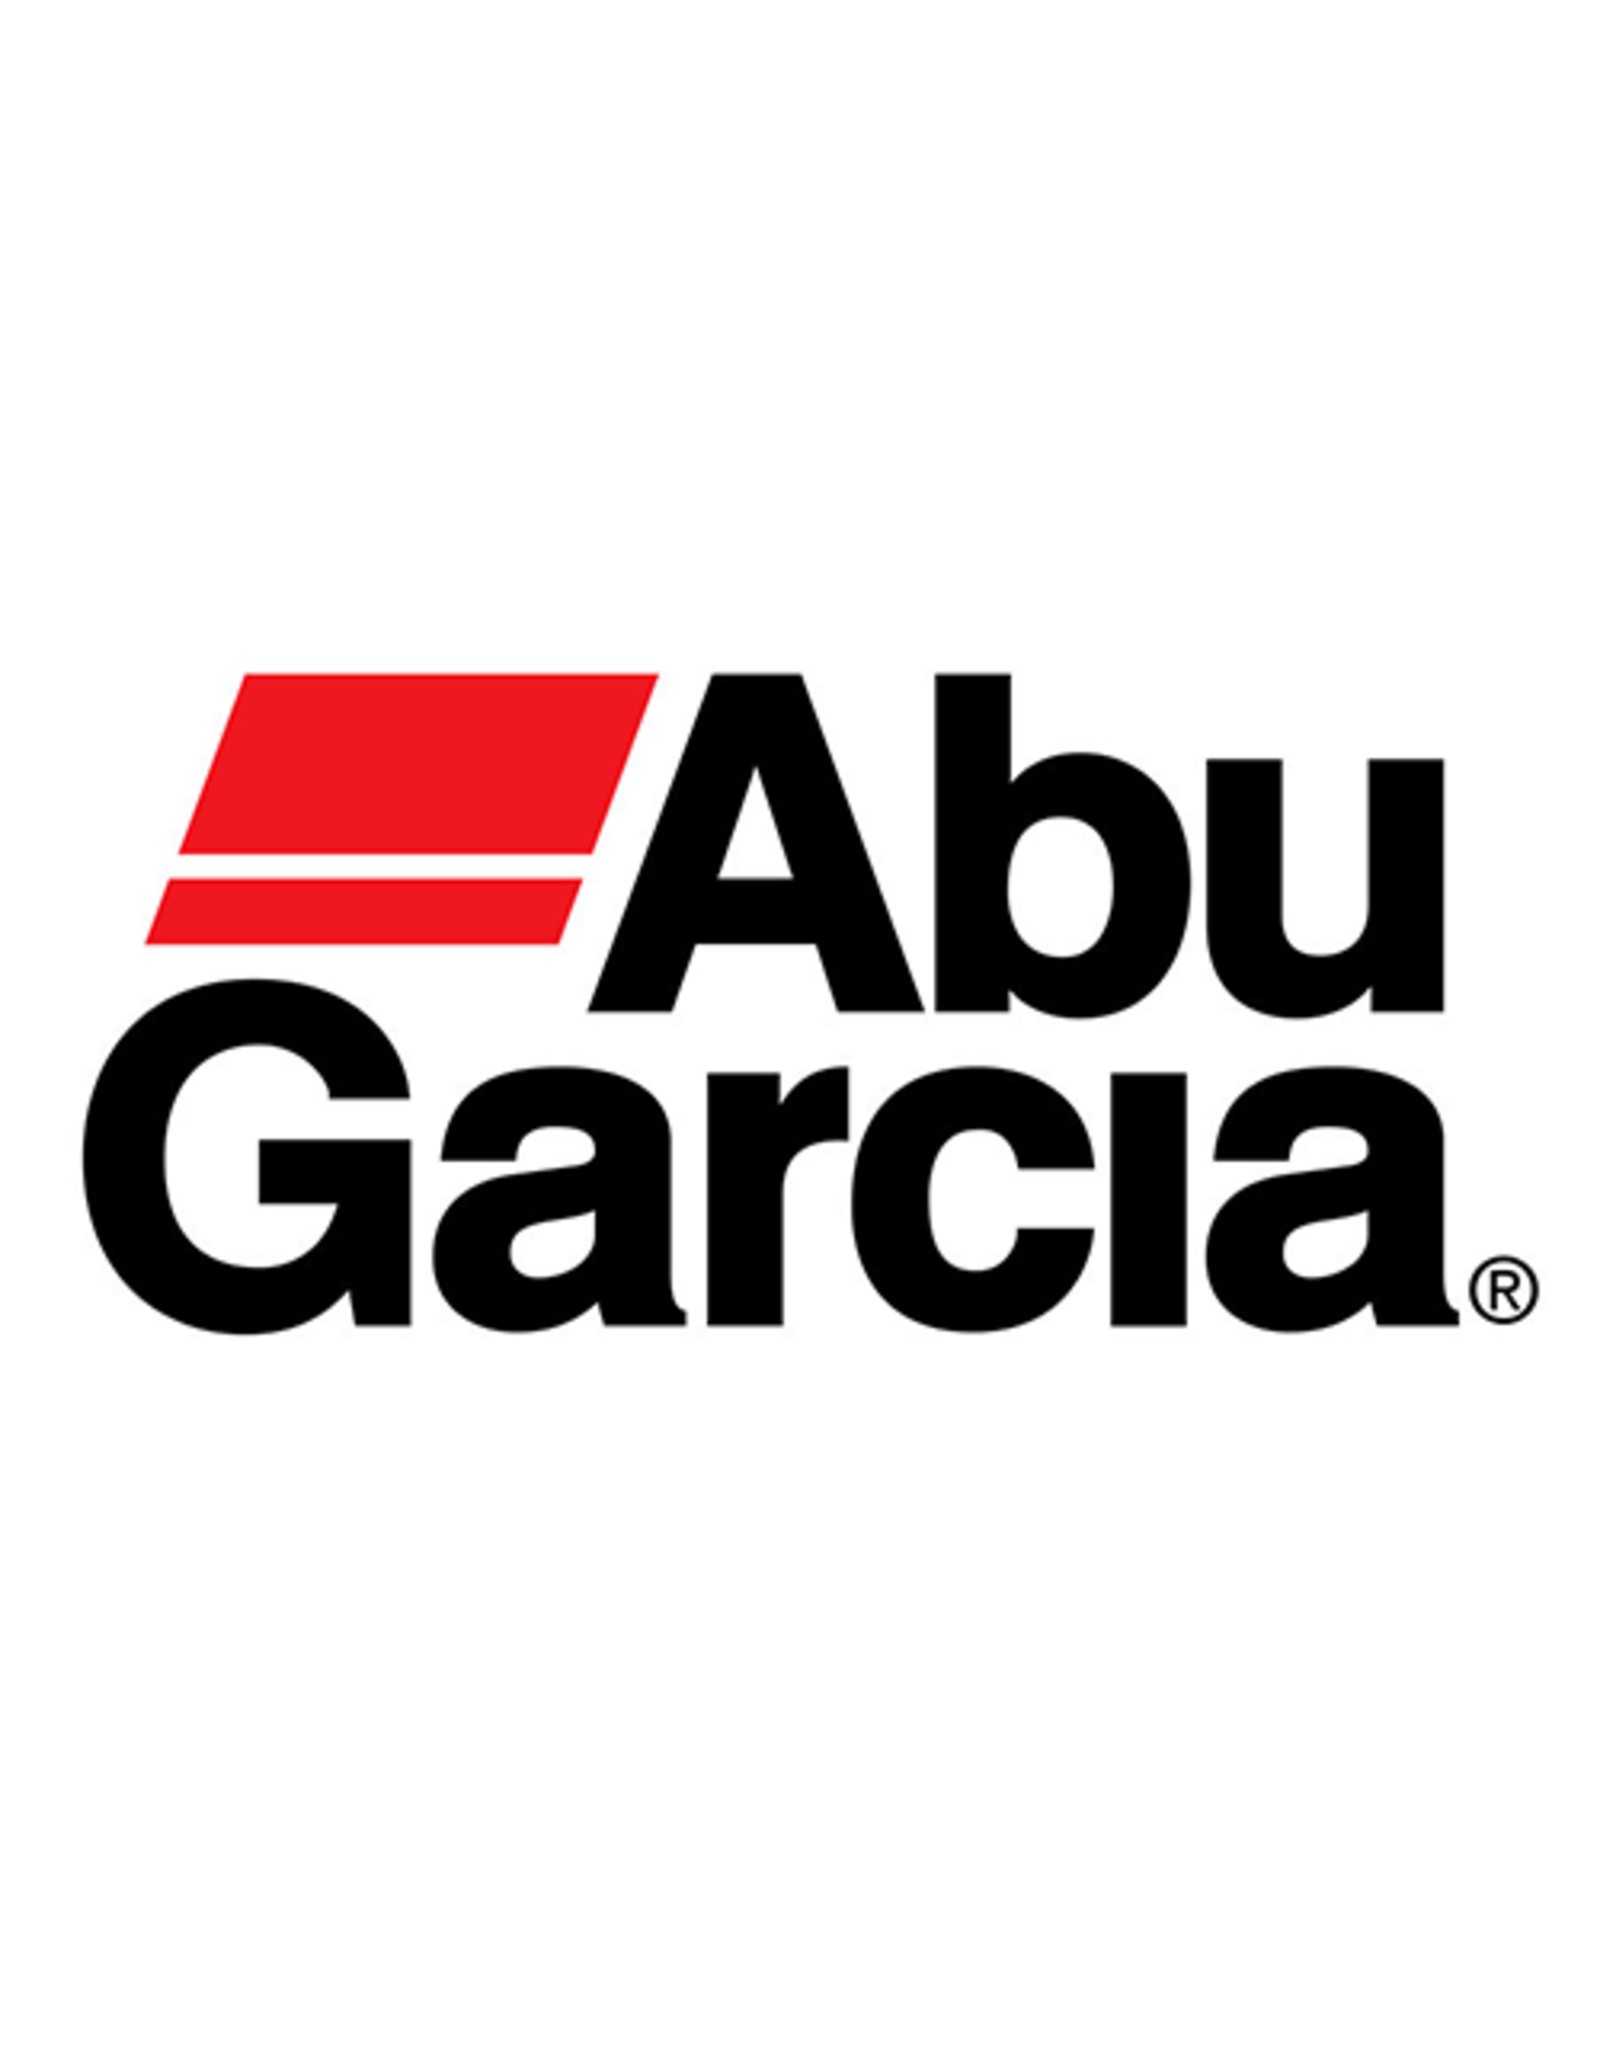 Abu Garcia 975395  CARR. GUARD